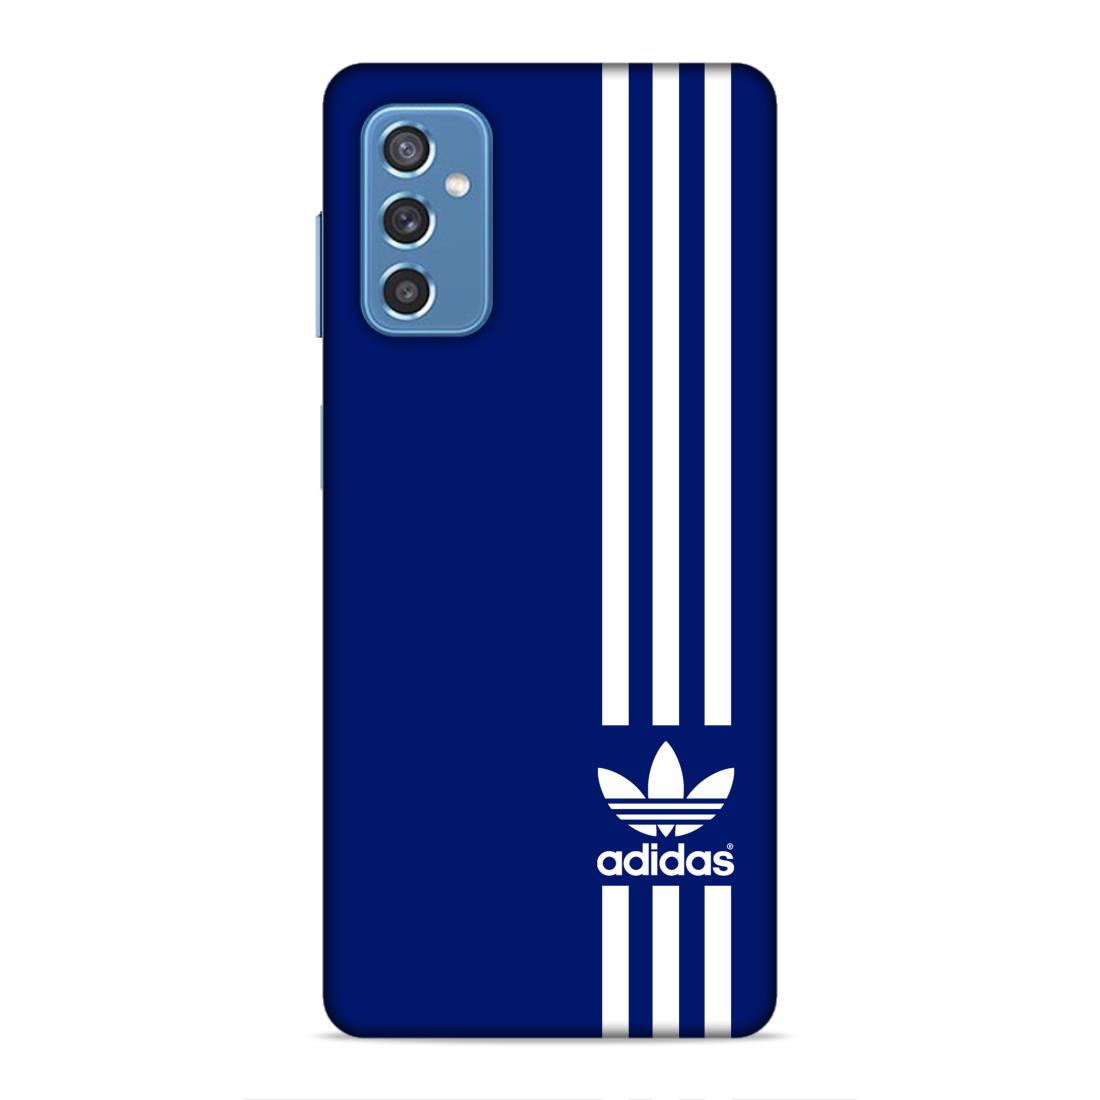 Adidas in Blue Hard Back Case For Samsung Galaxy M52 5G